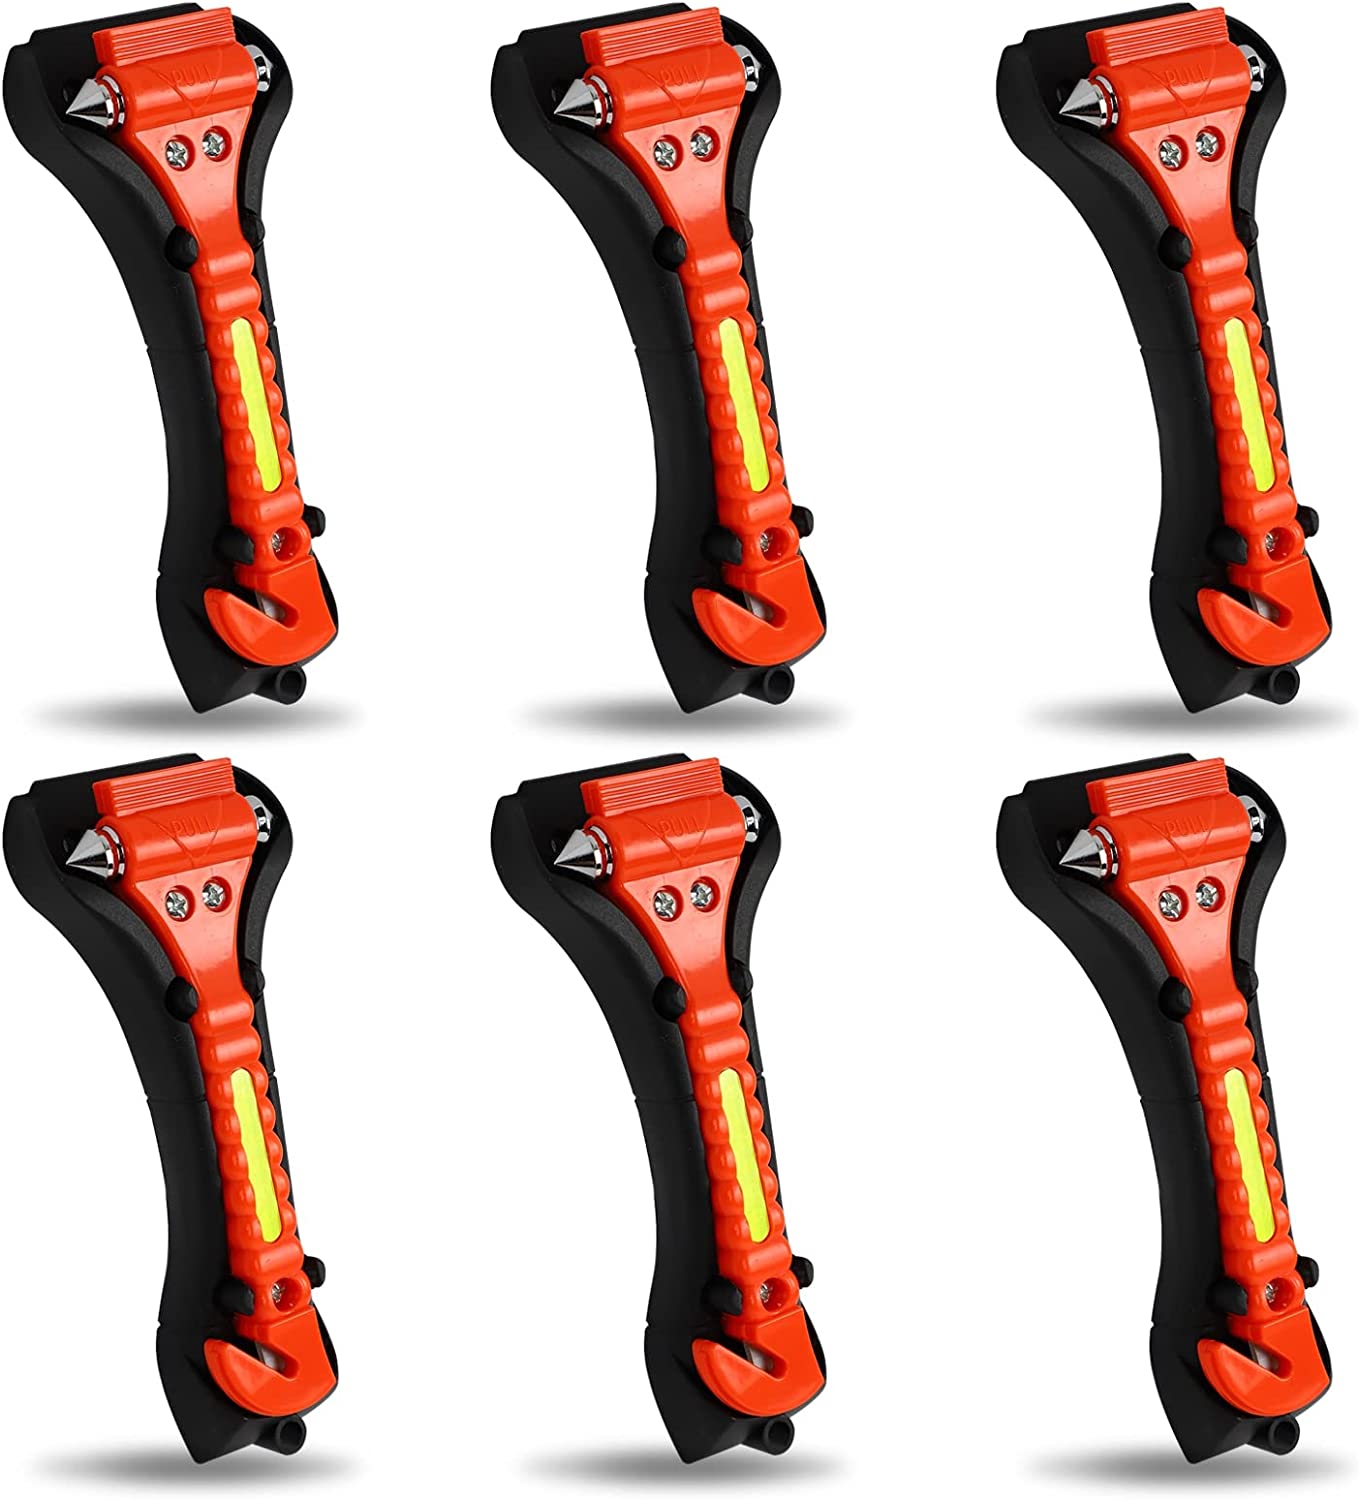 Hammerdex Car Safety Tool, Hammerdex Tool, Safehammer Glass Breaker